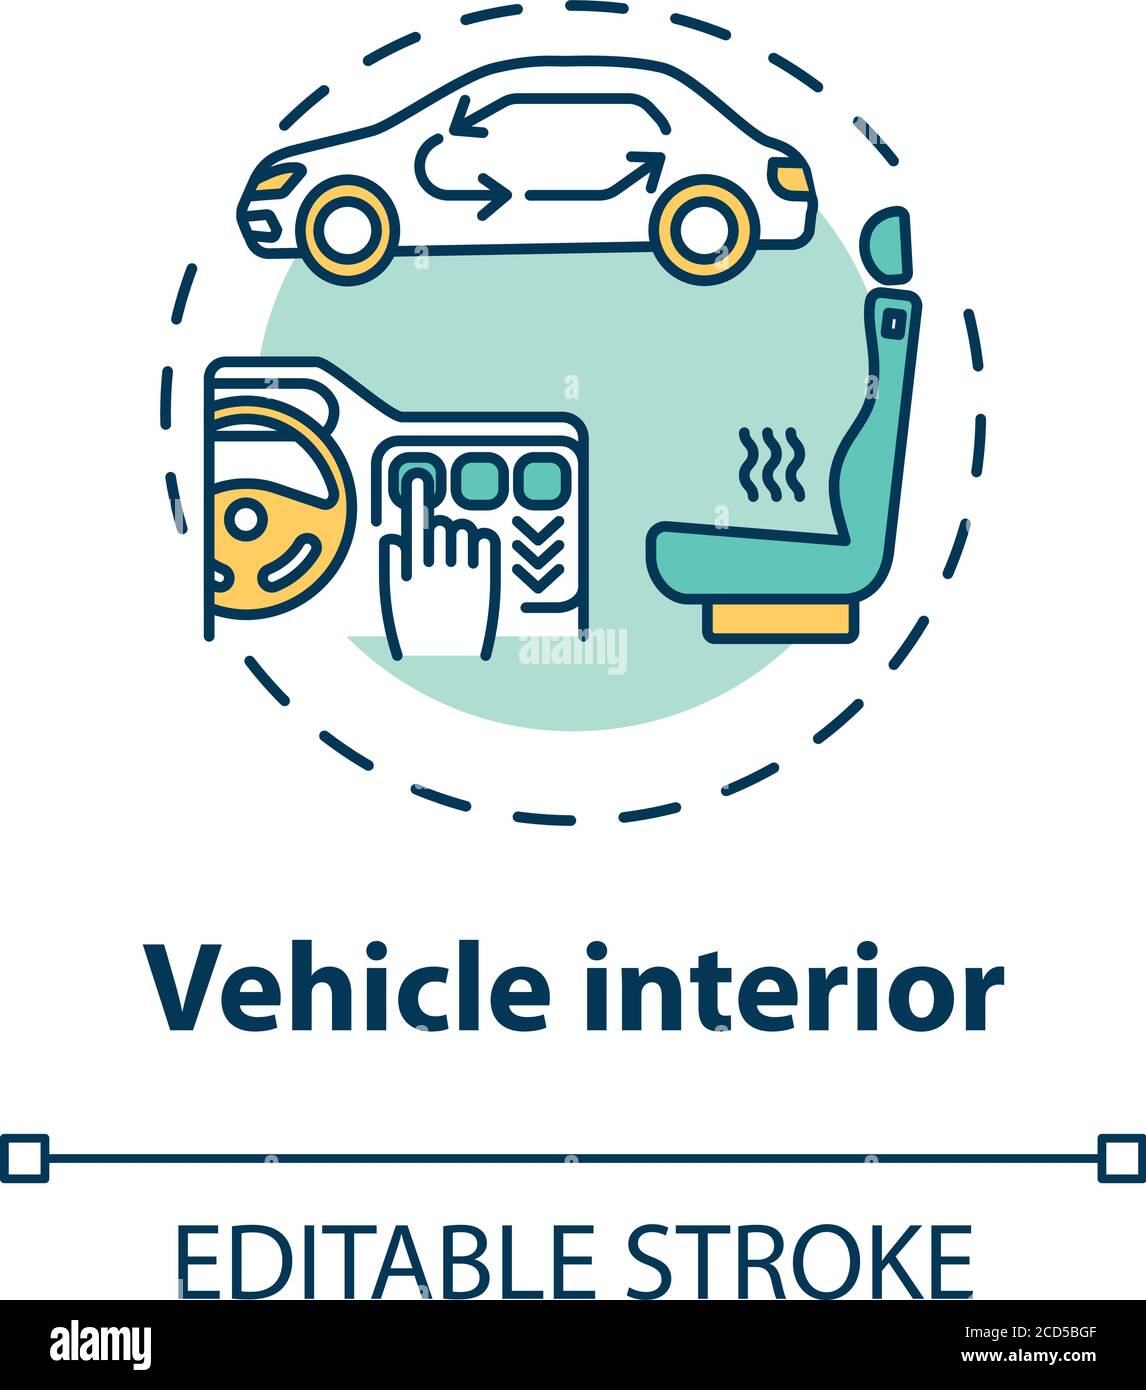 Vehicle interior concept icon Stock Vector